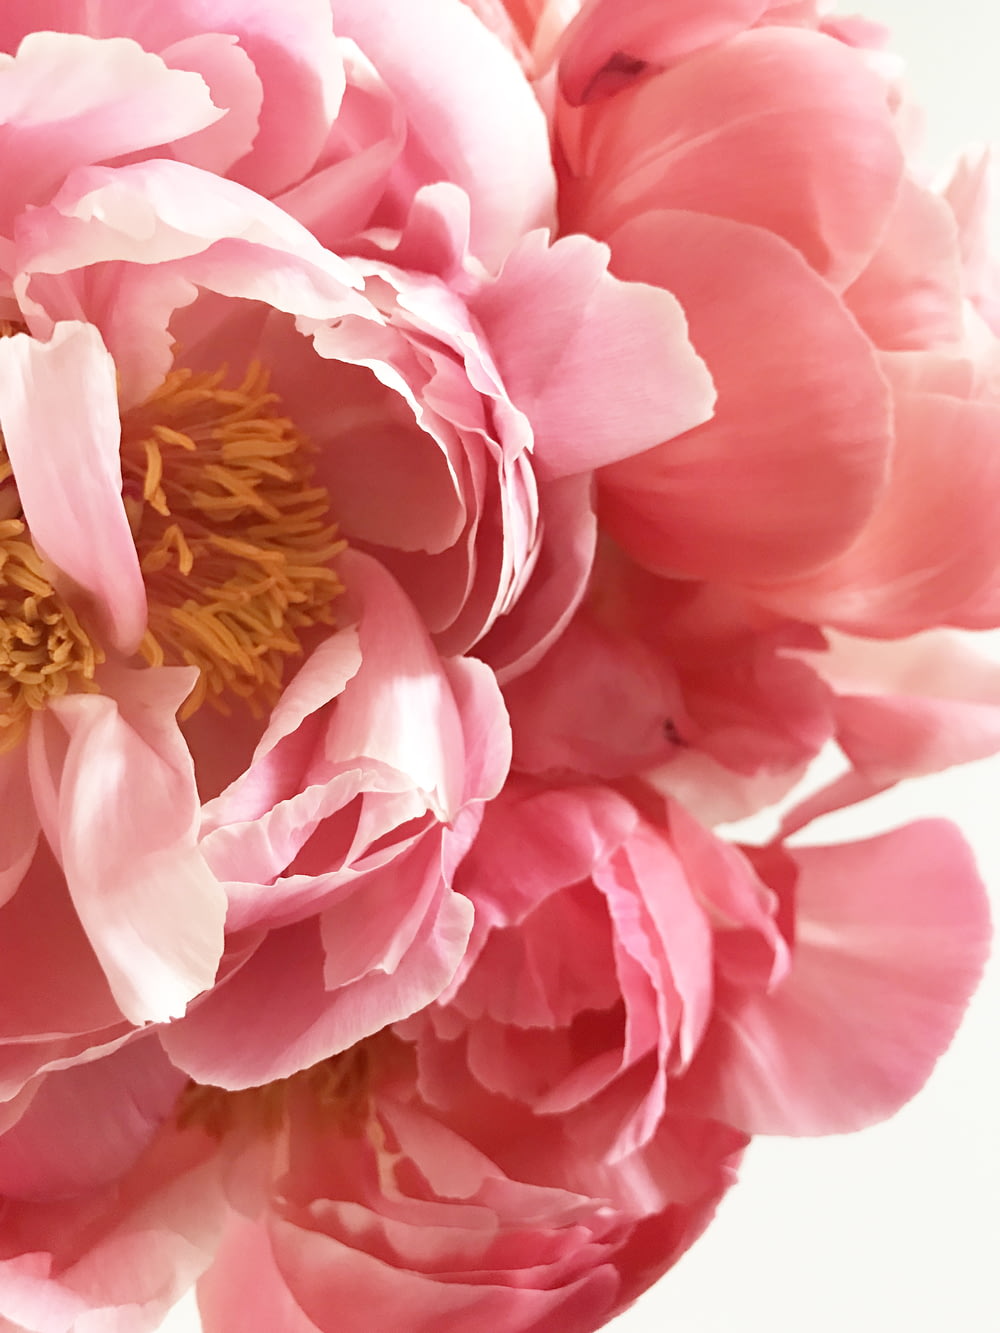 flor rosada de pétalos agrupados